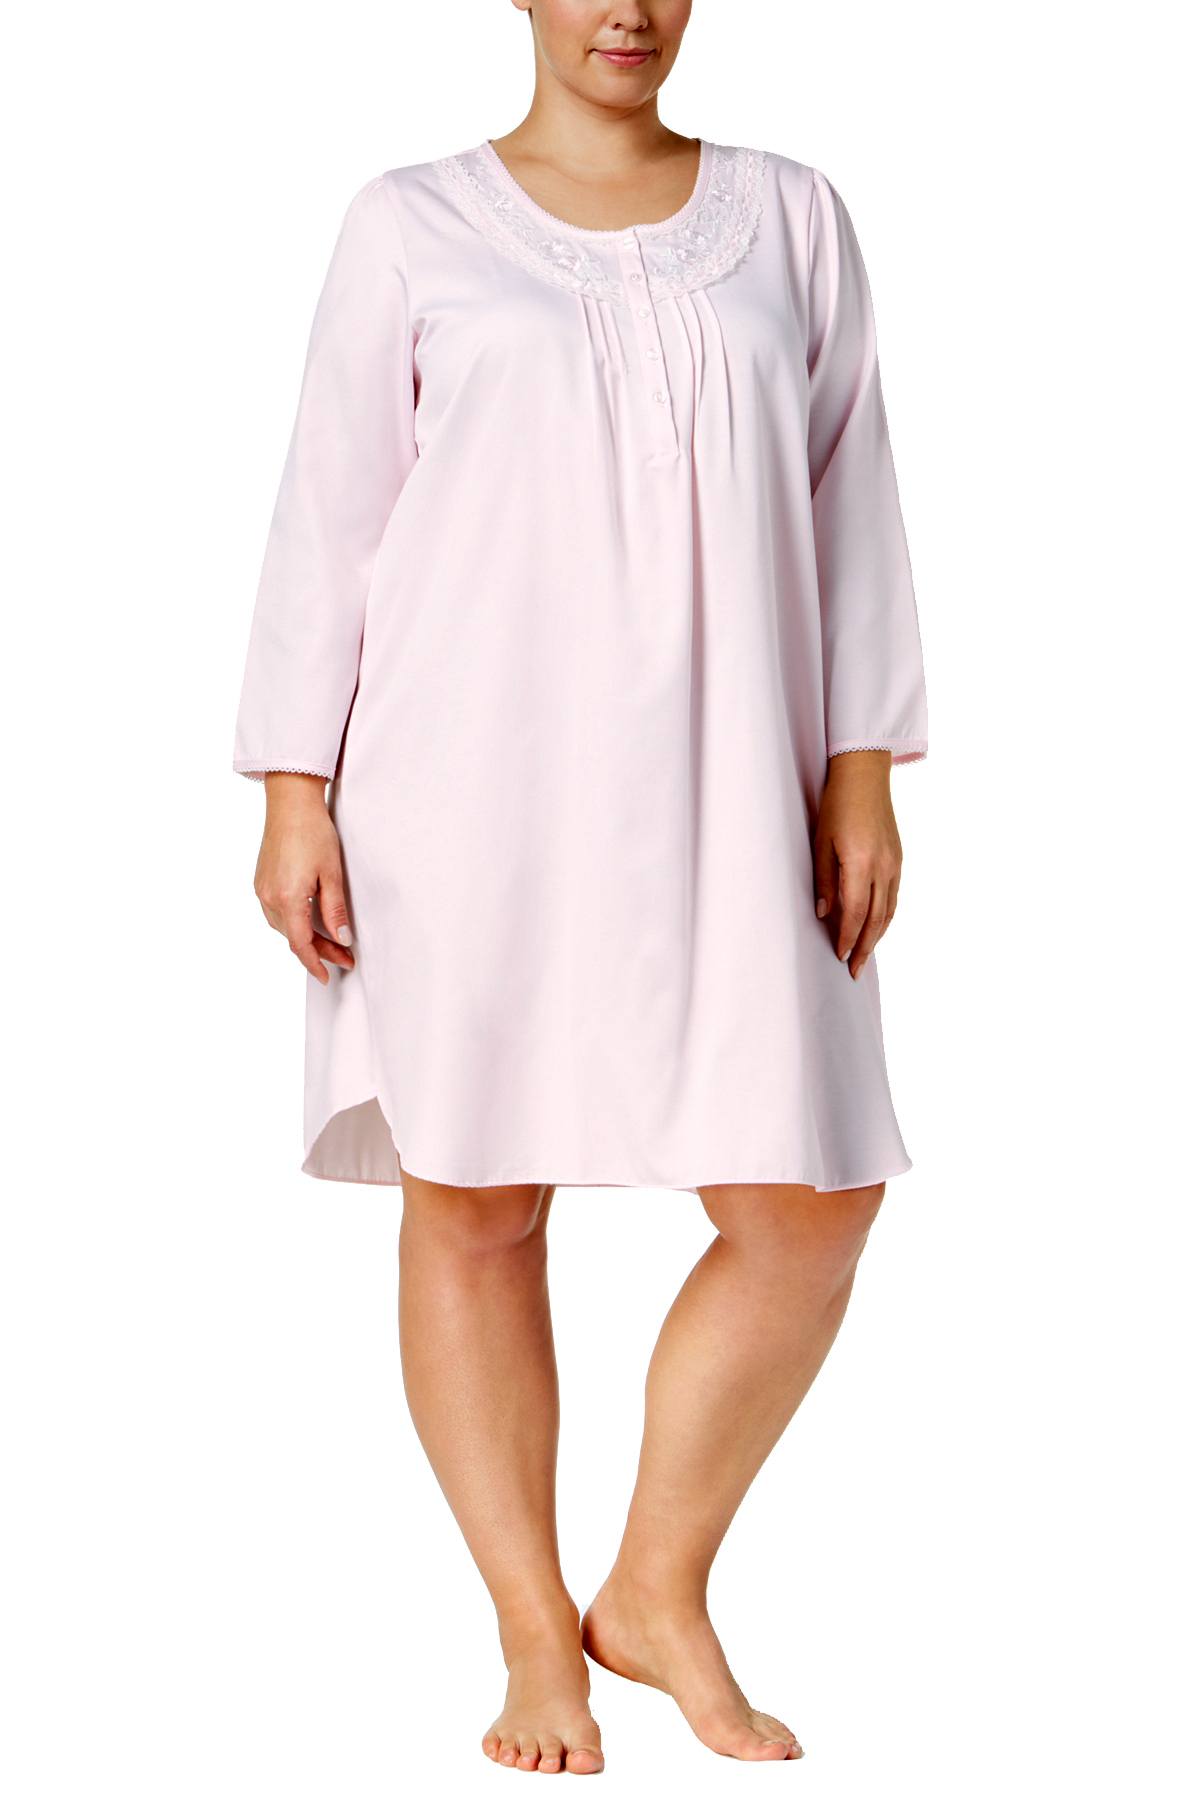 Miss Elaine PLUS Light-Pink Brushed-Satin Nightgown